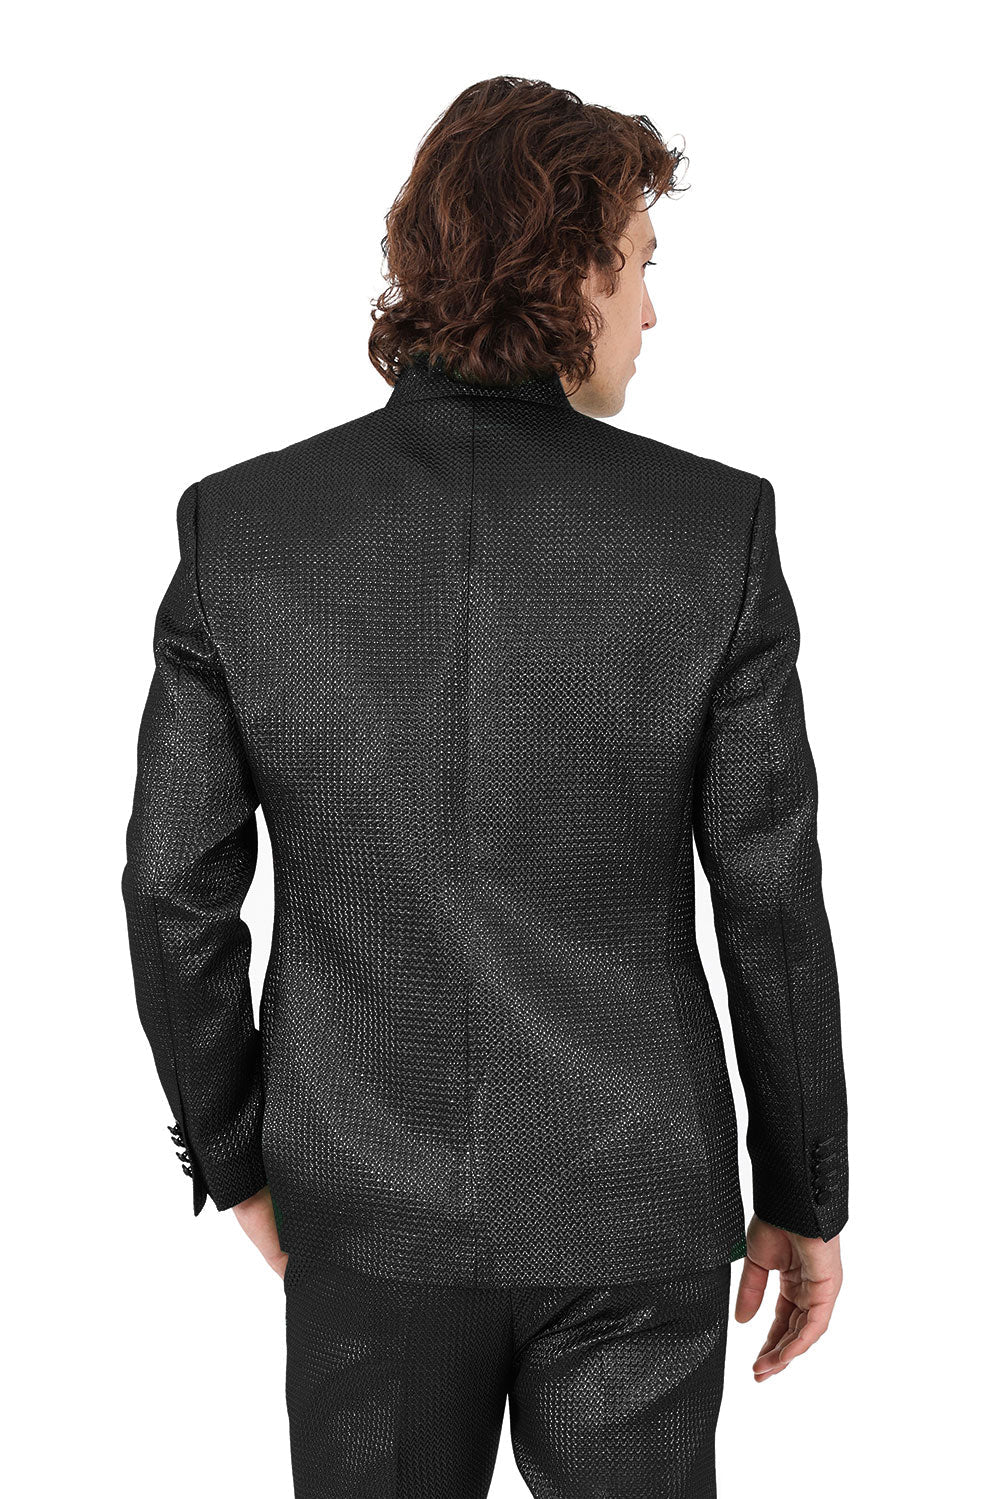 Barabas Men's Stand Collar Shiny Textured Material Blazer 2BL3105 Black